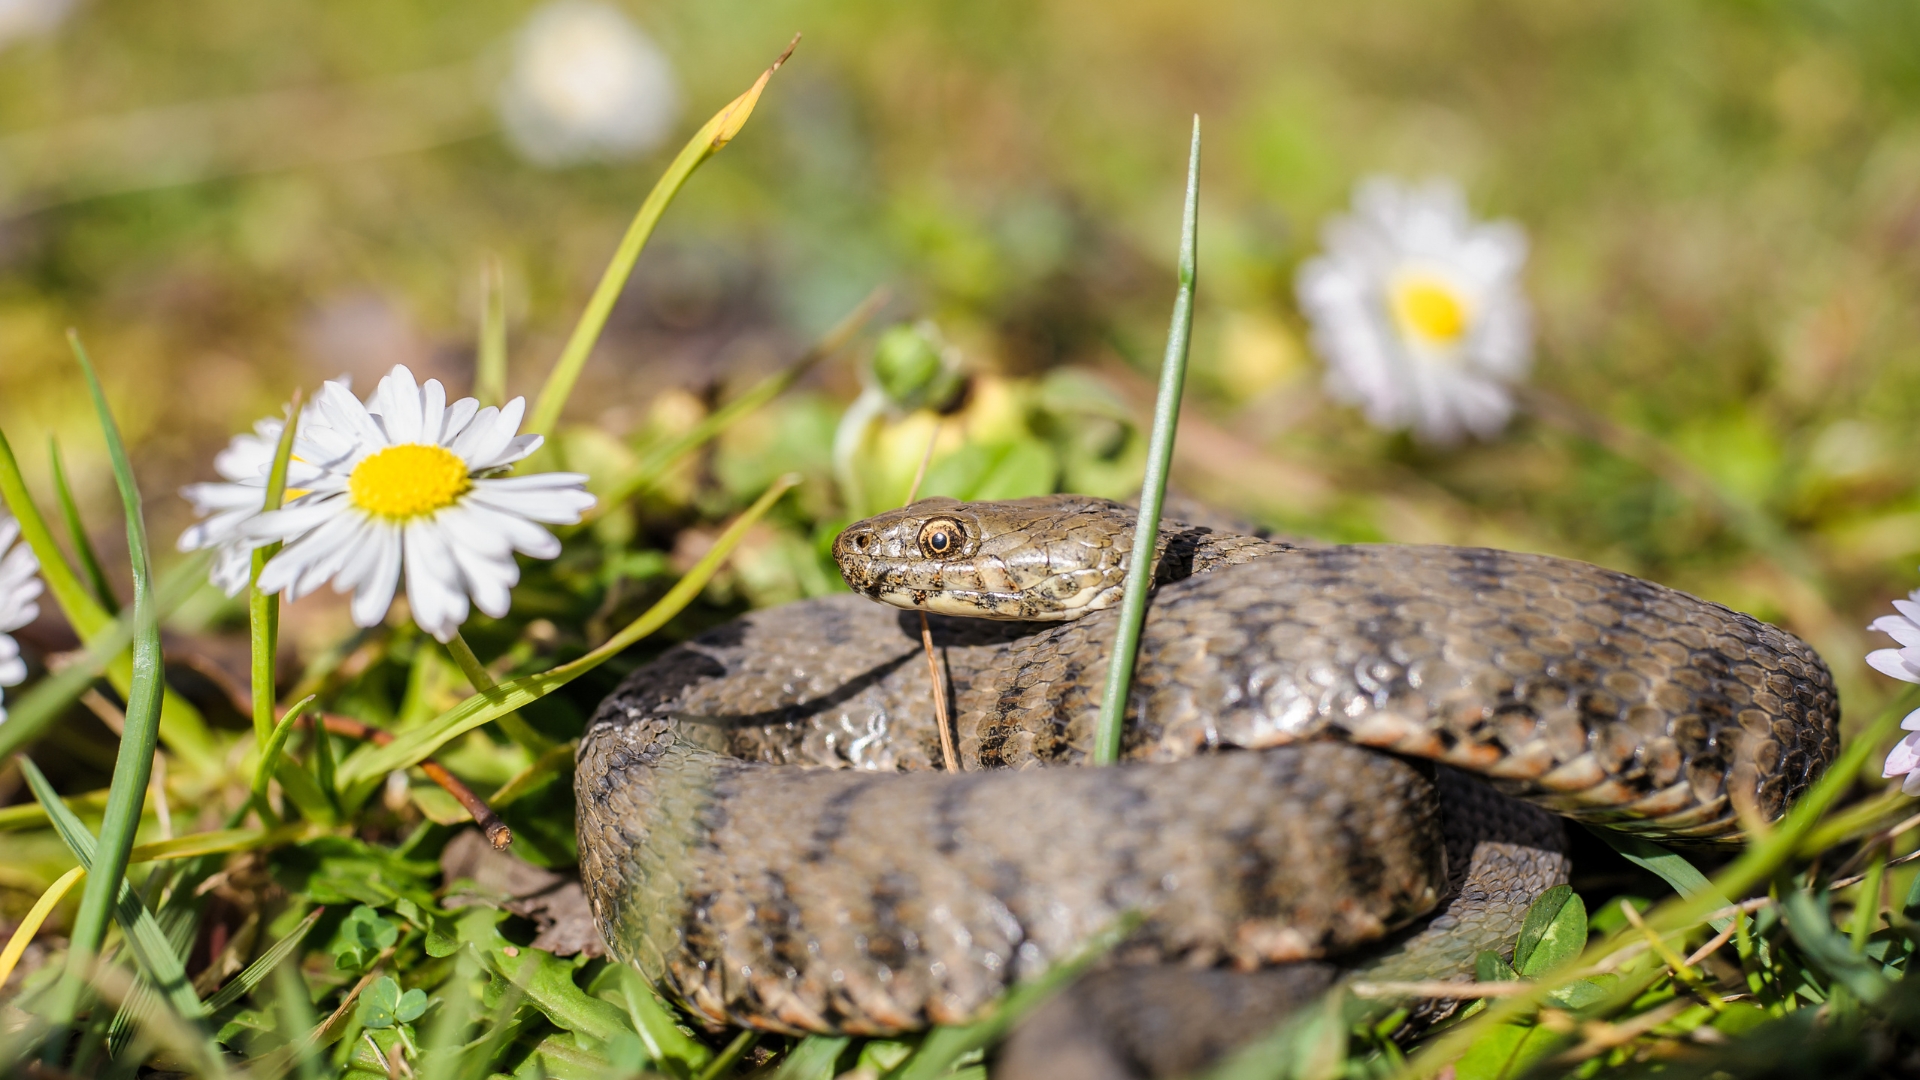 photo of snake on grass